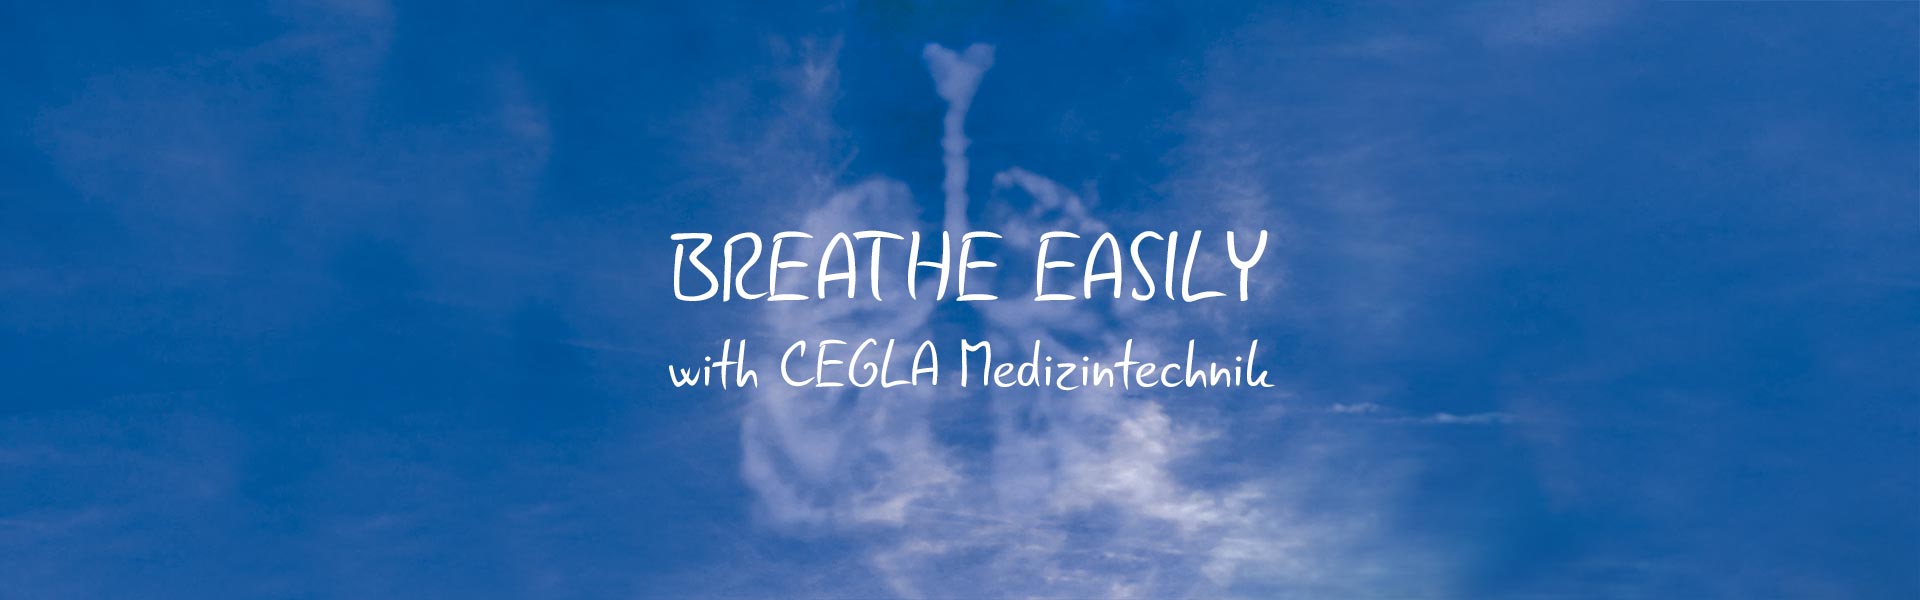 BREATHE EASILY with CEGLA Medizintechnik